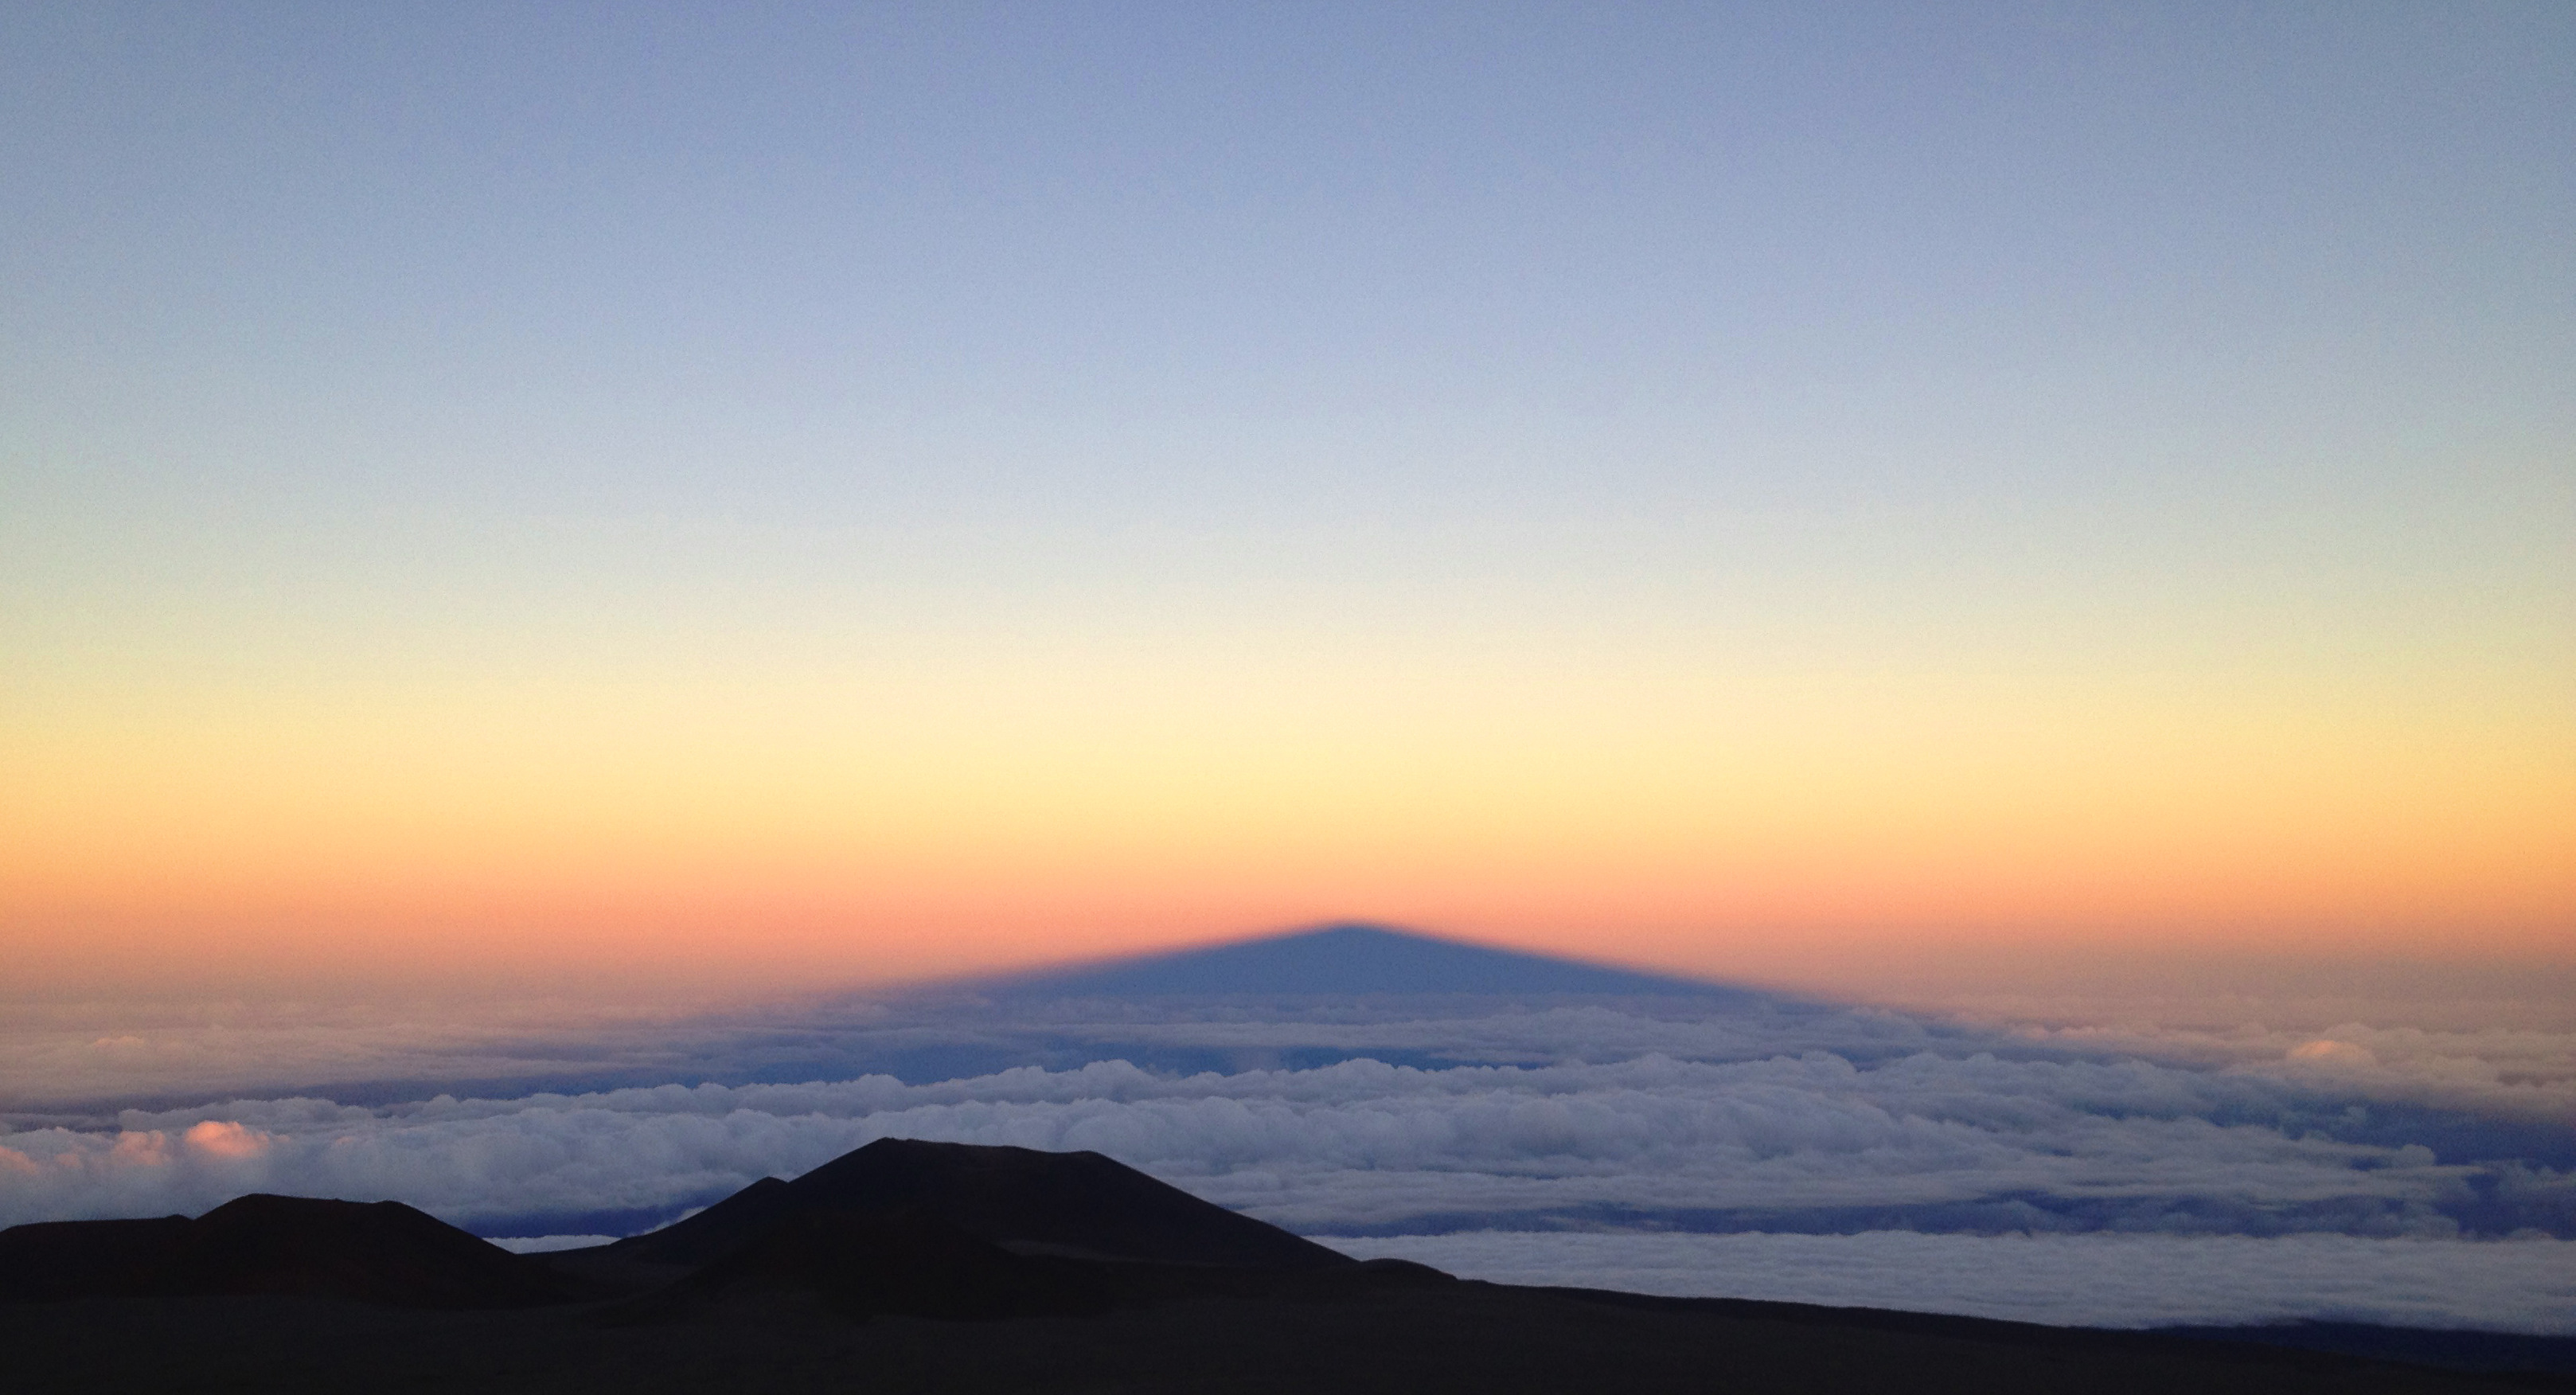 The shadow of Mauna Kea peak on the clouds down below